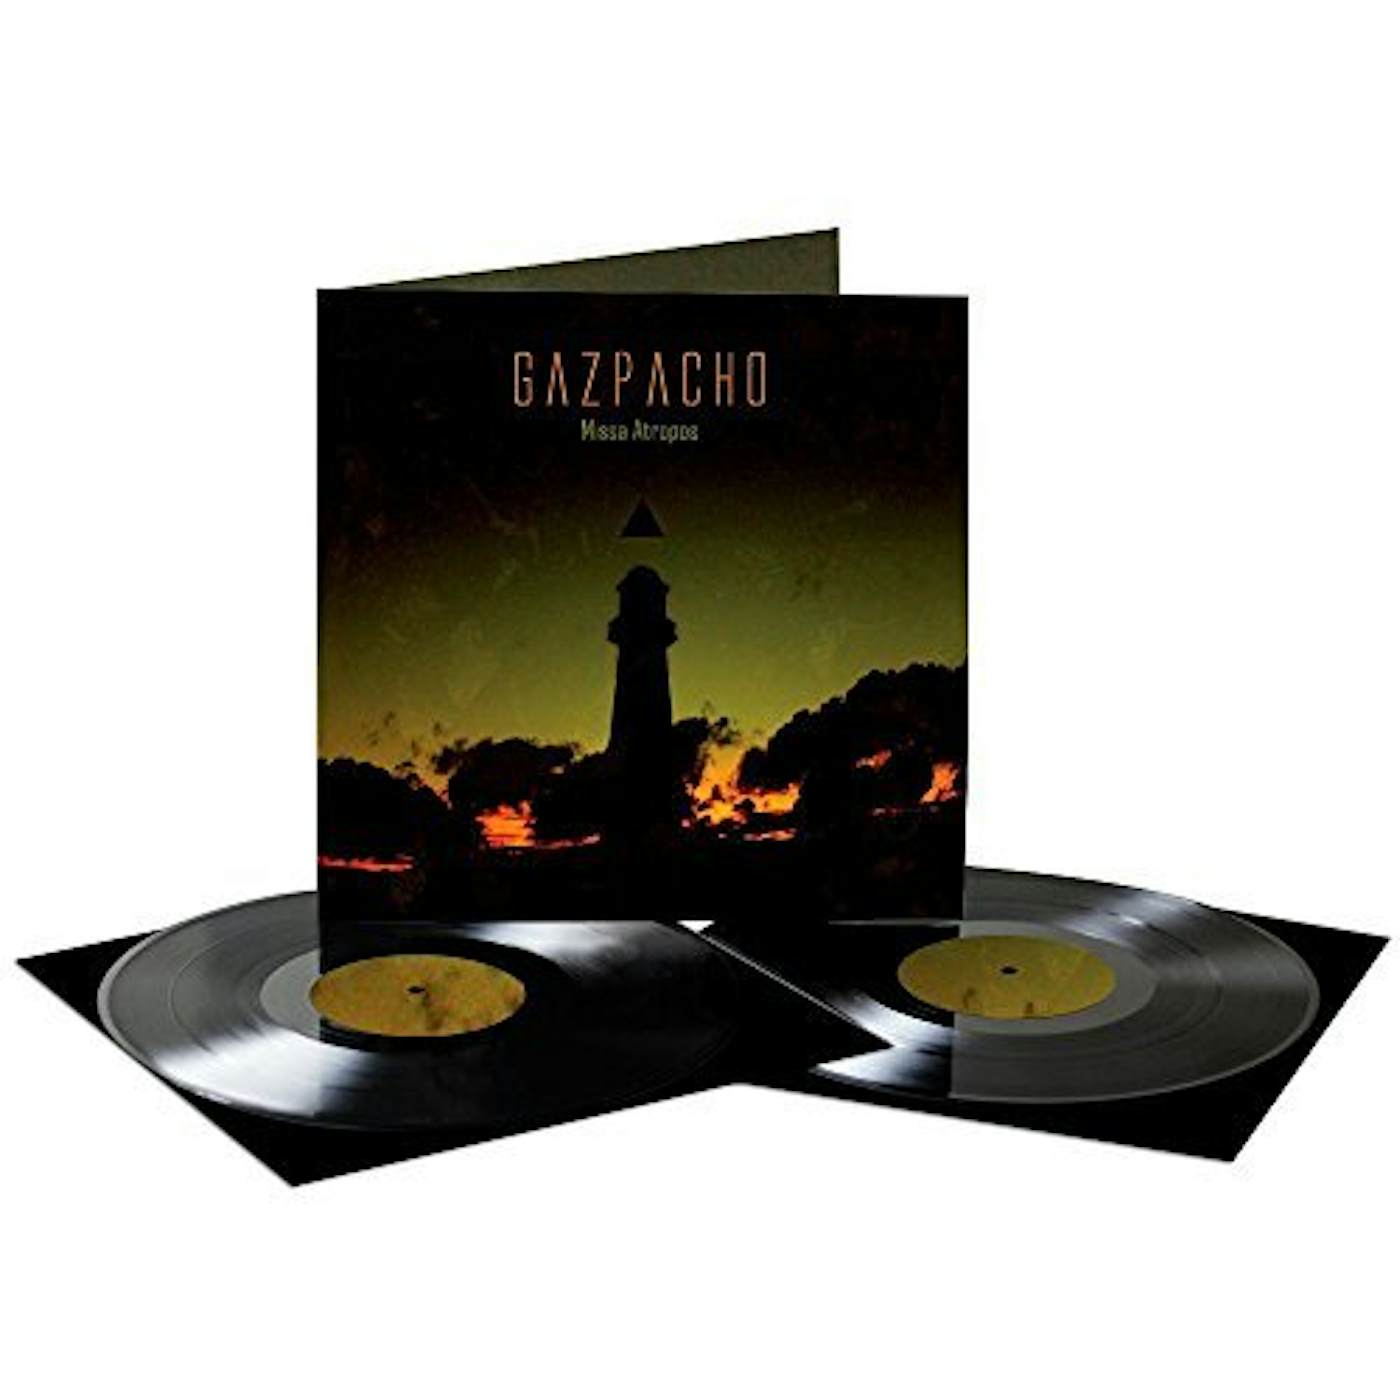 Gazpacho Missa Atropos Vinyl Record